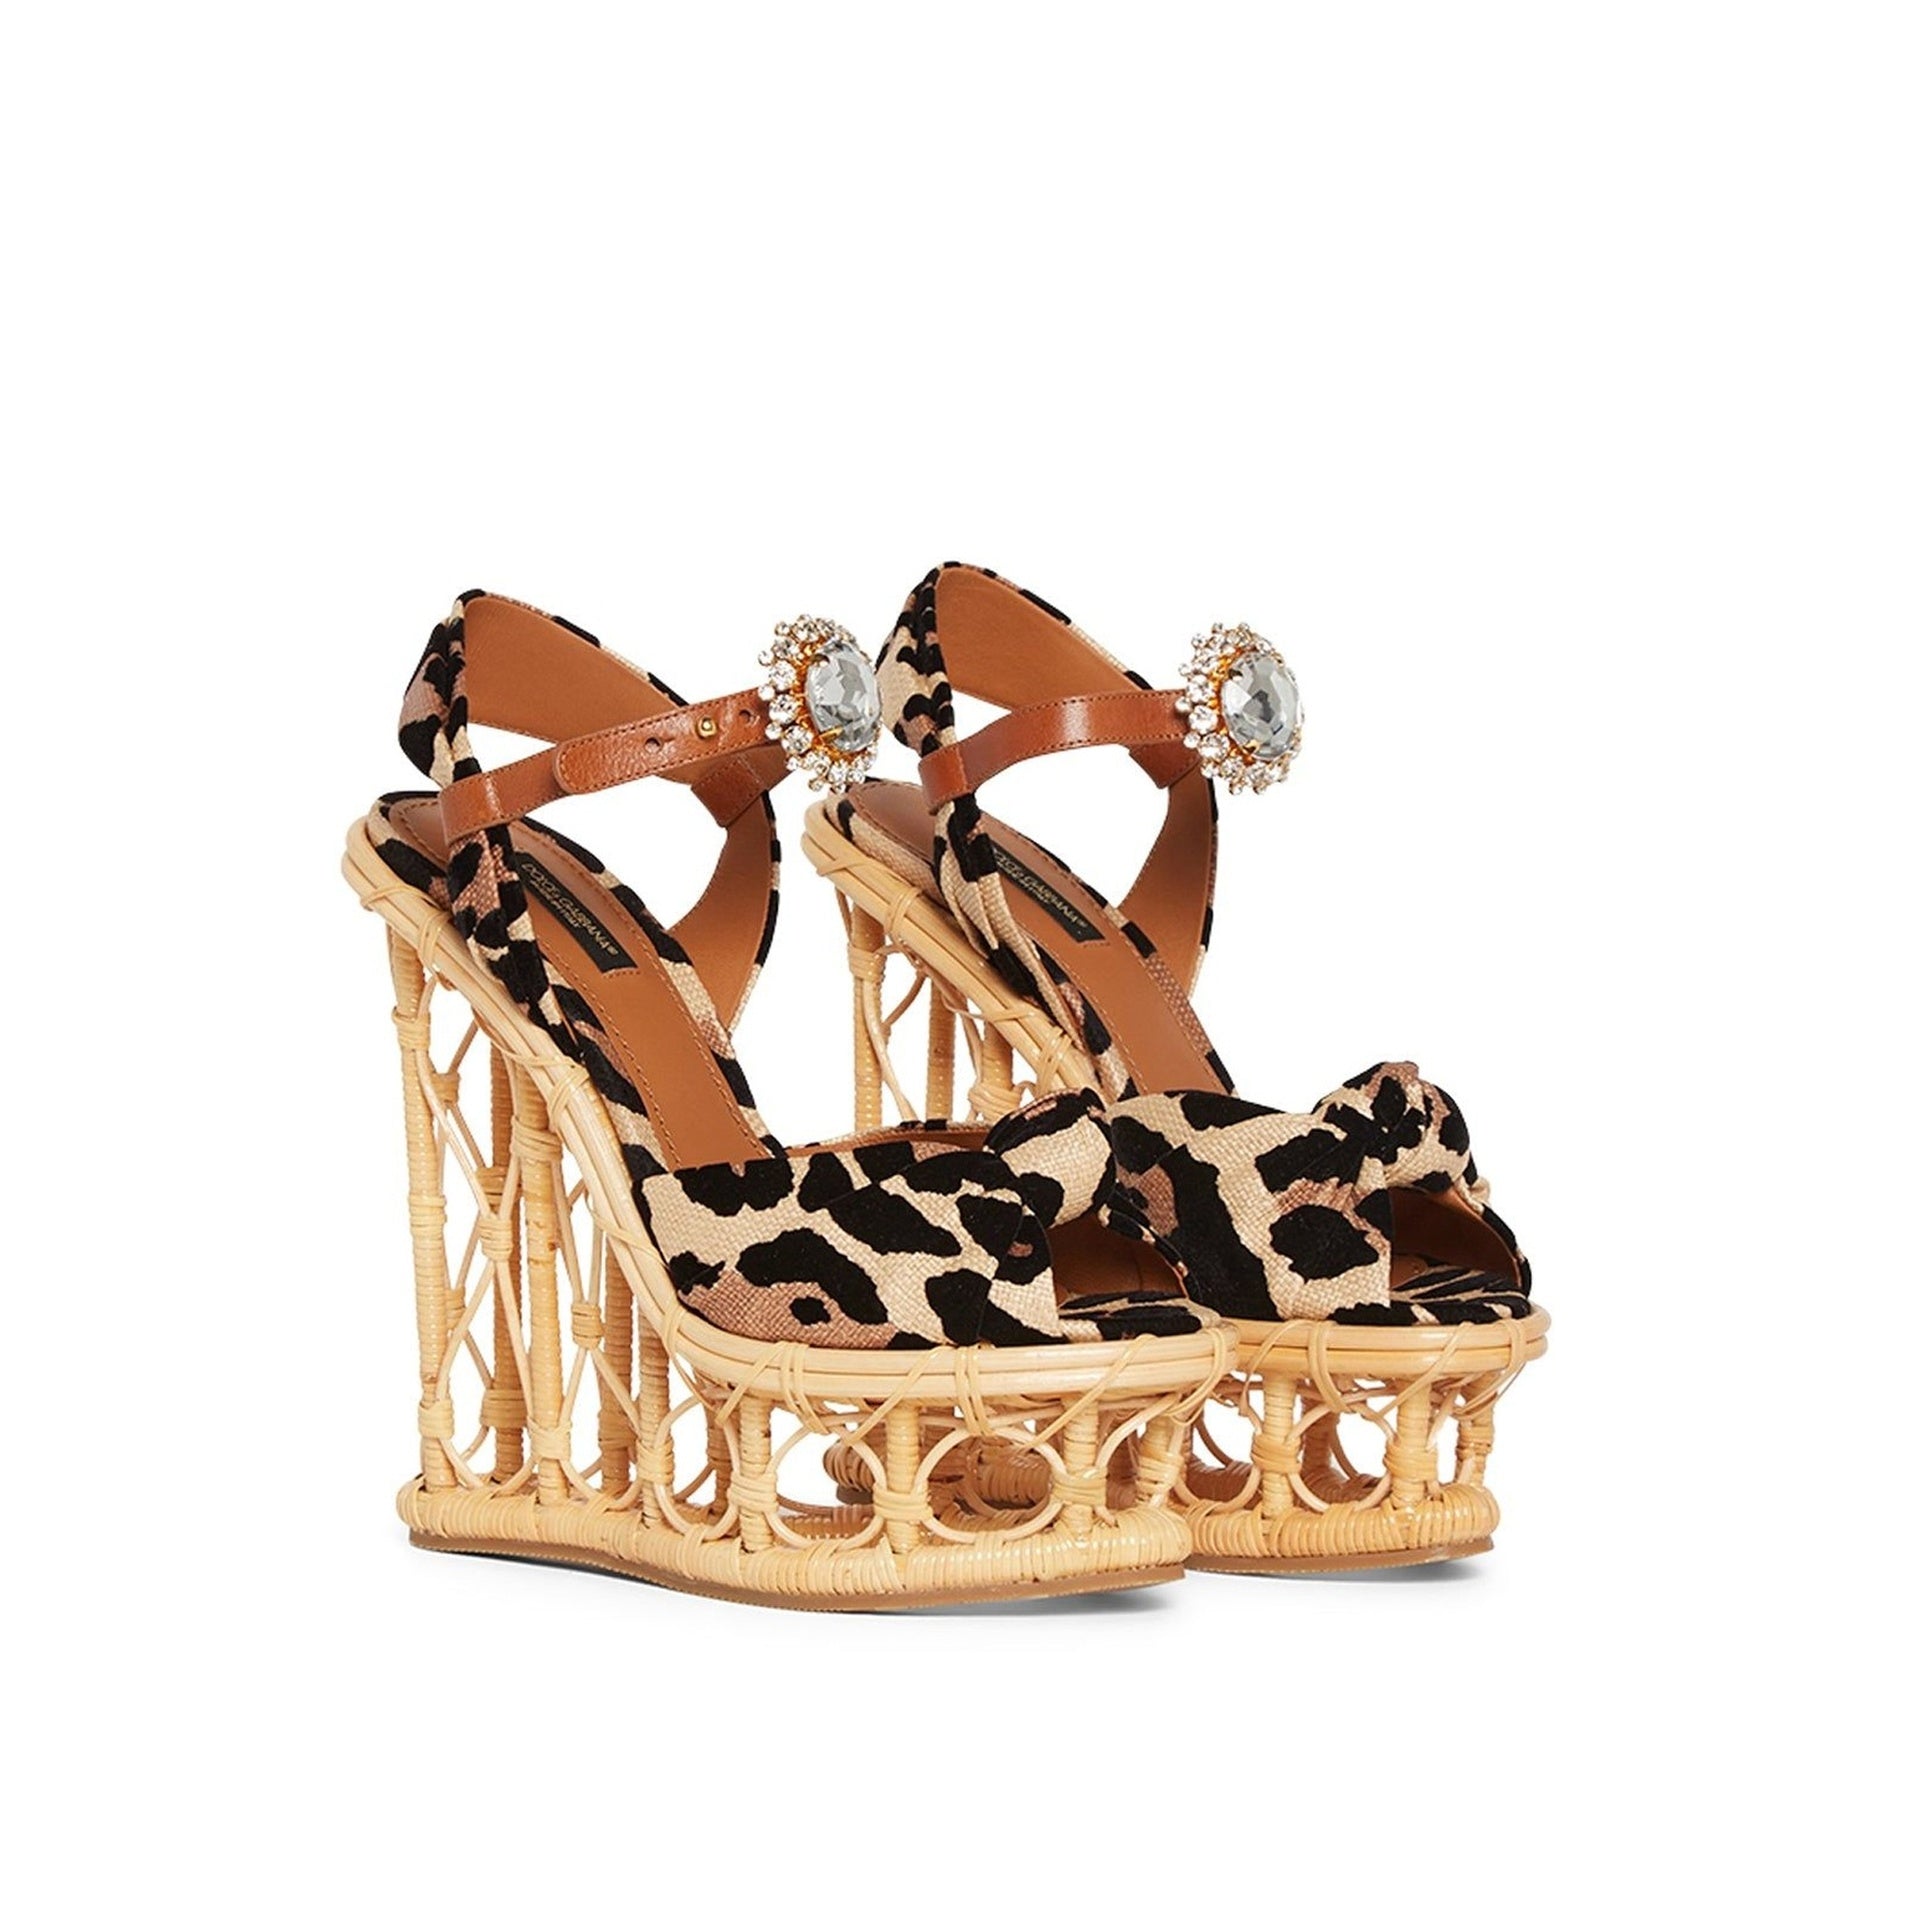 DOLCE-GABBANA-OUTLET-SALE-Dolce-Gabbana-Wedge-Sandals-Sandalen-ARCHIVE-COLLECTION-2.jpg